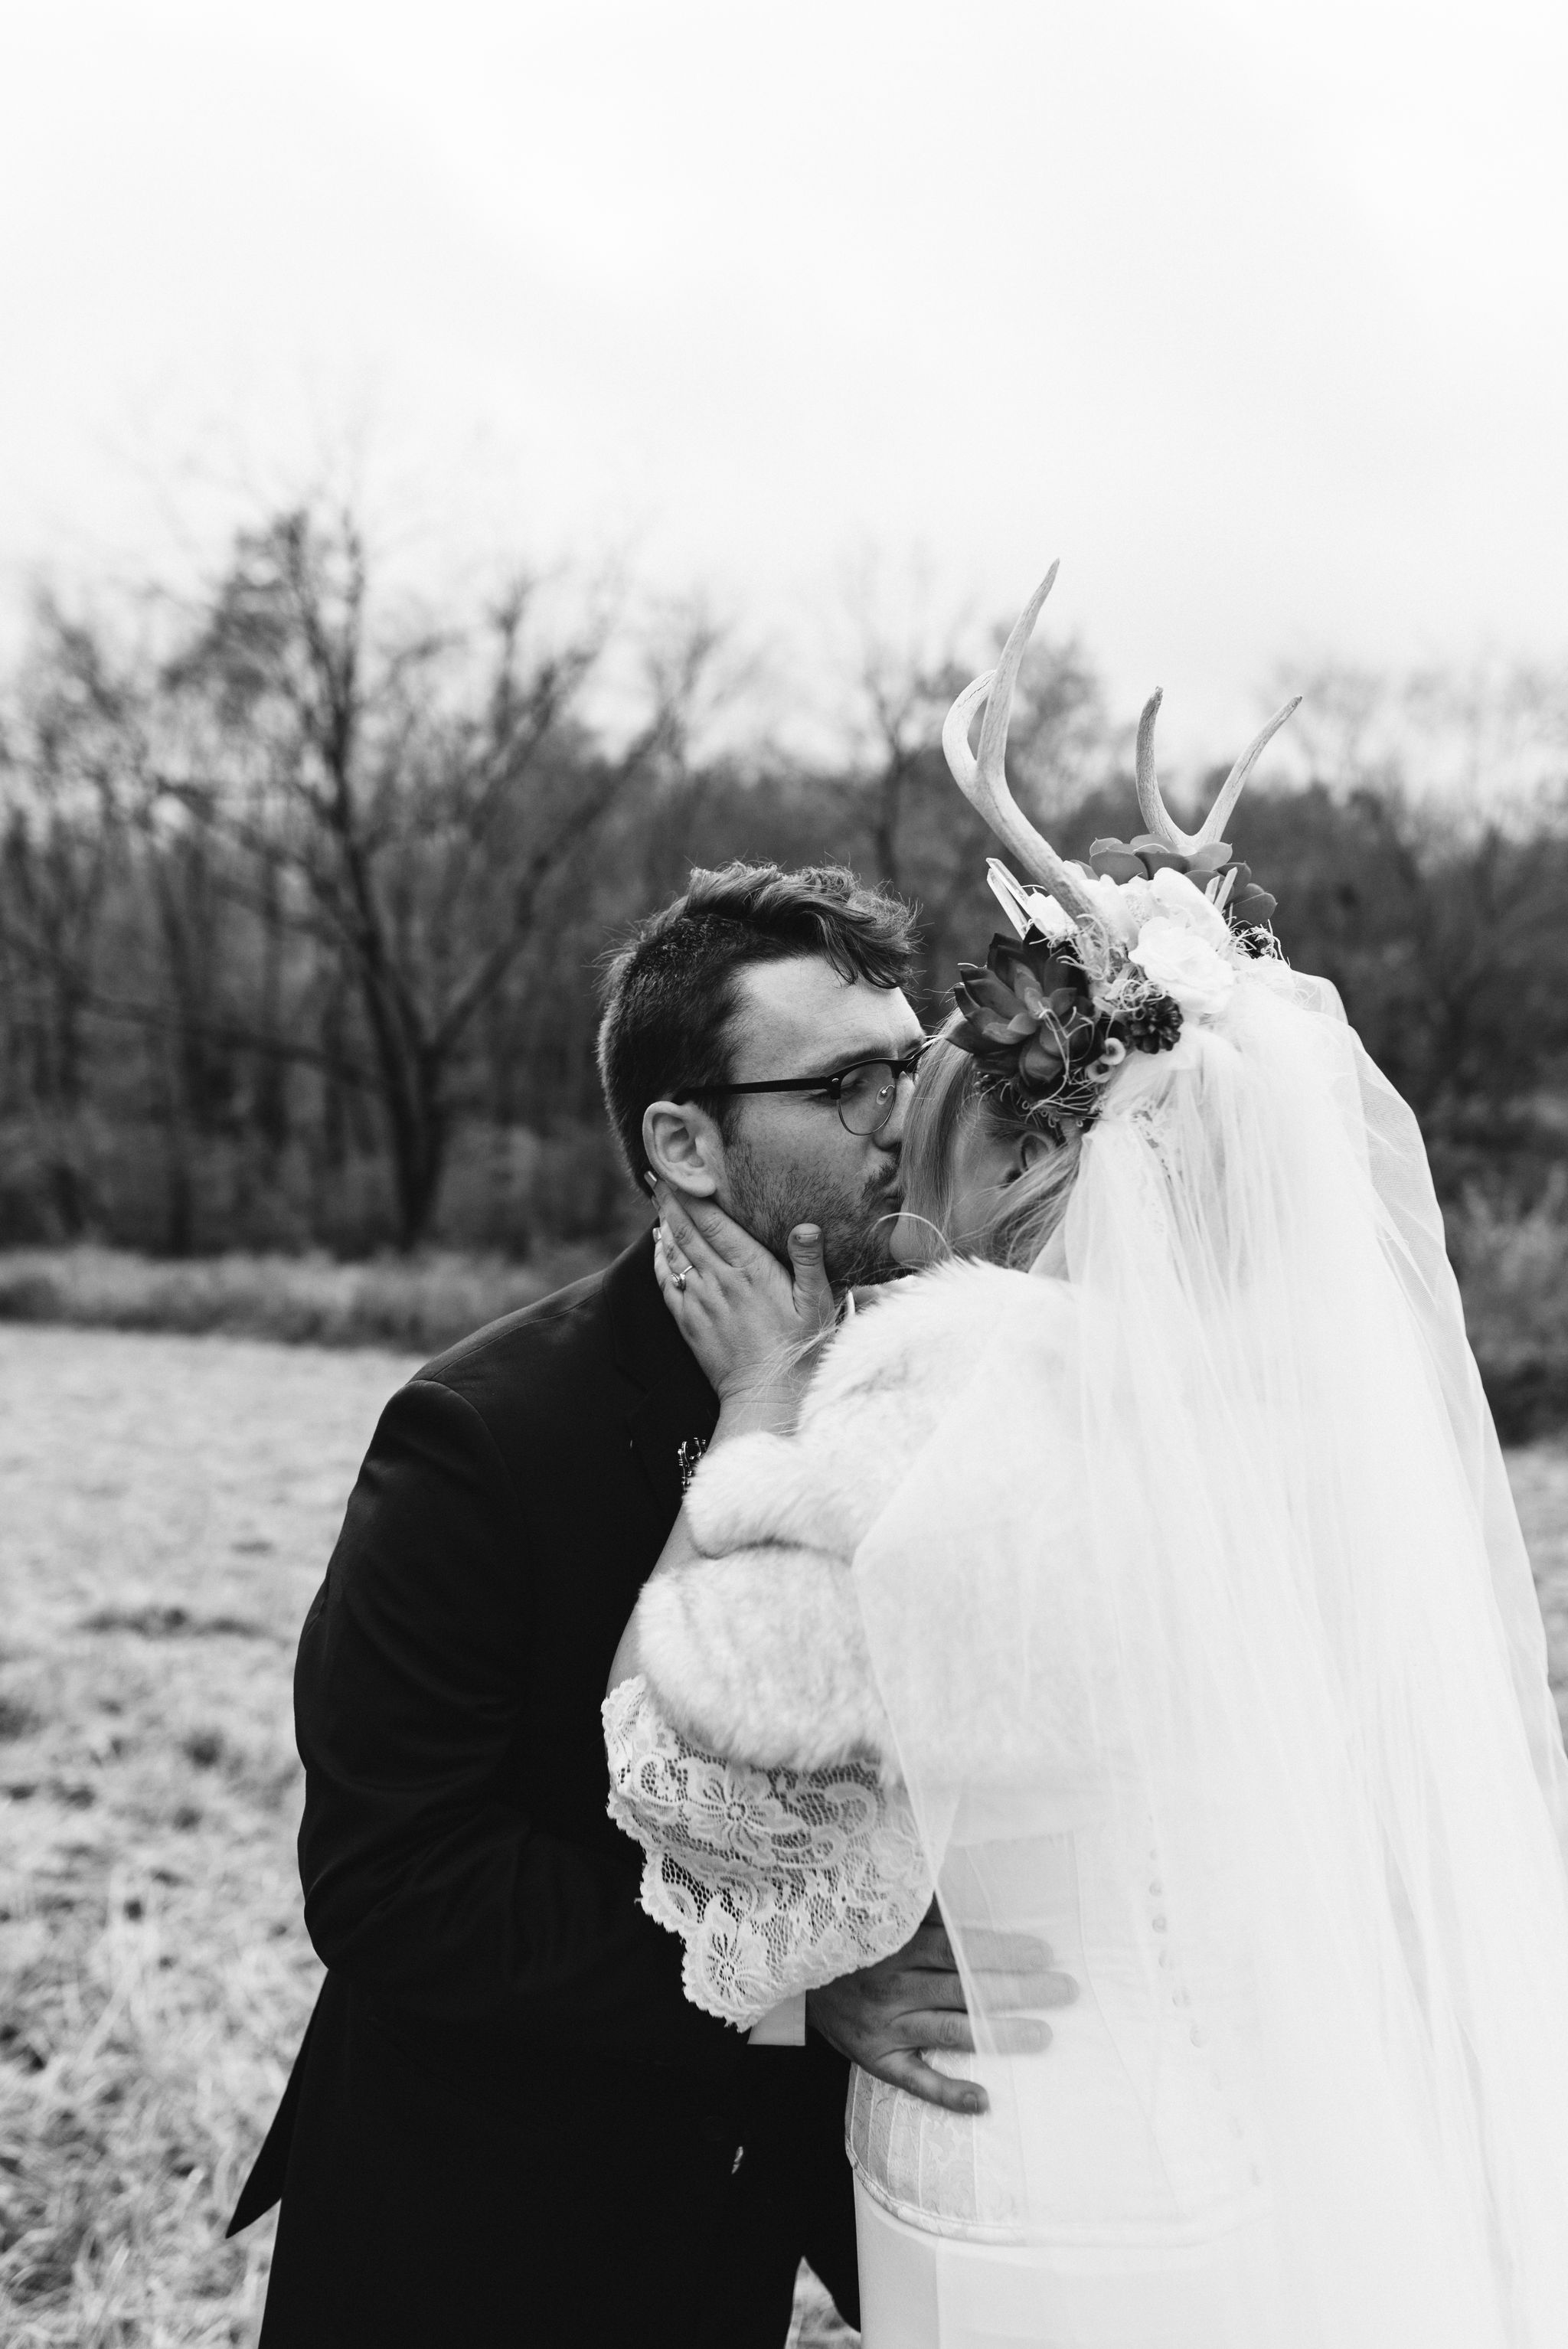  Maryland, Baltimore Wedding Photographer, Backyard Wedding, Fall, October, Dark Bohemian, Whimsical, Fun, Bride and Groom Kissing, Black and White Photo 